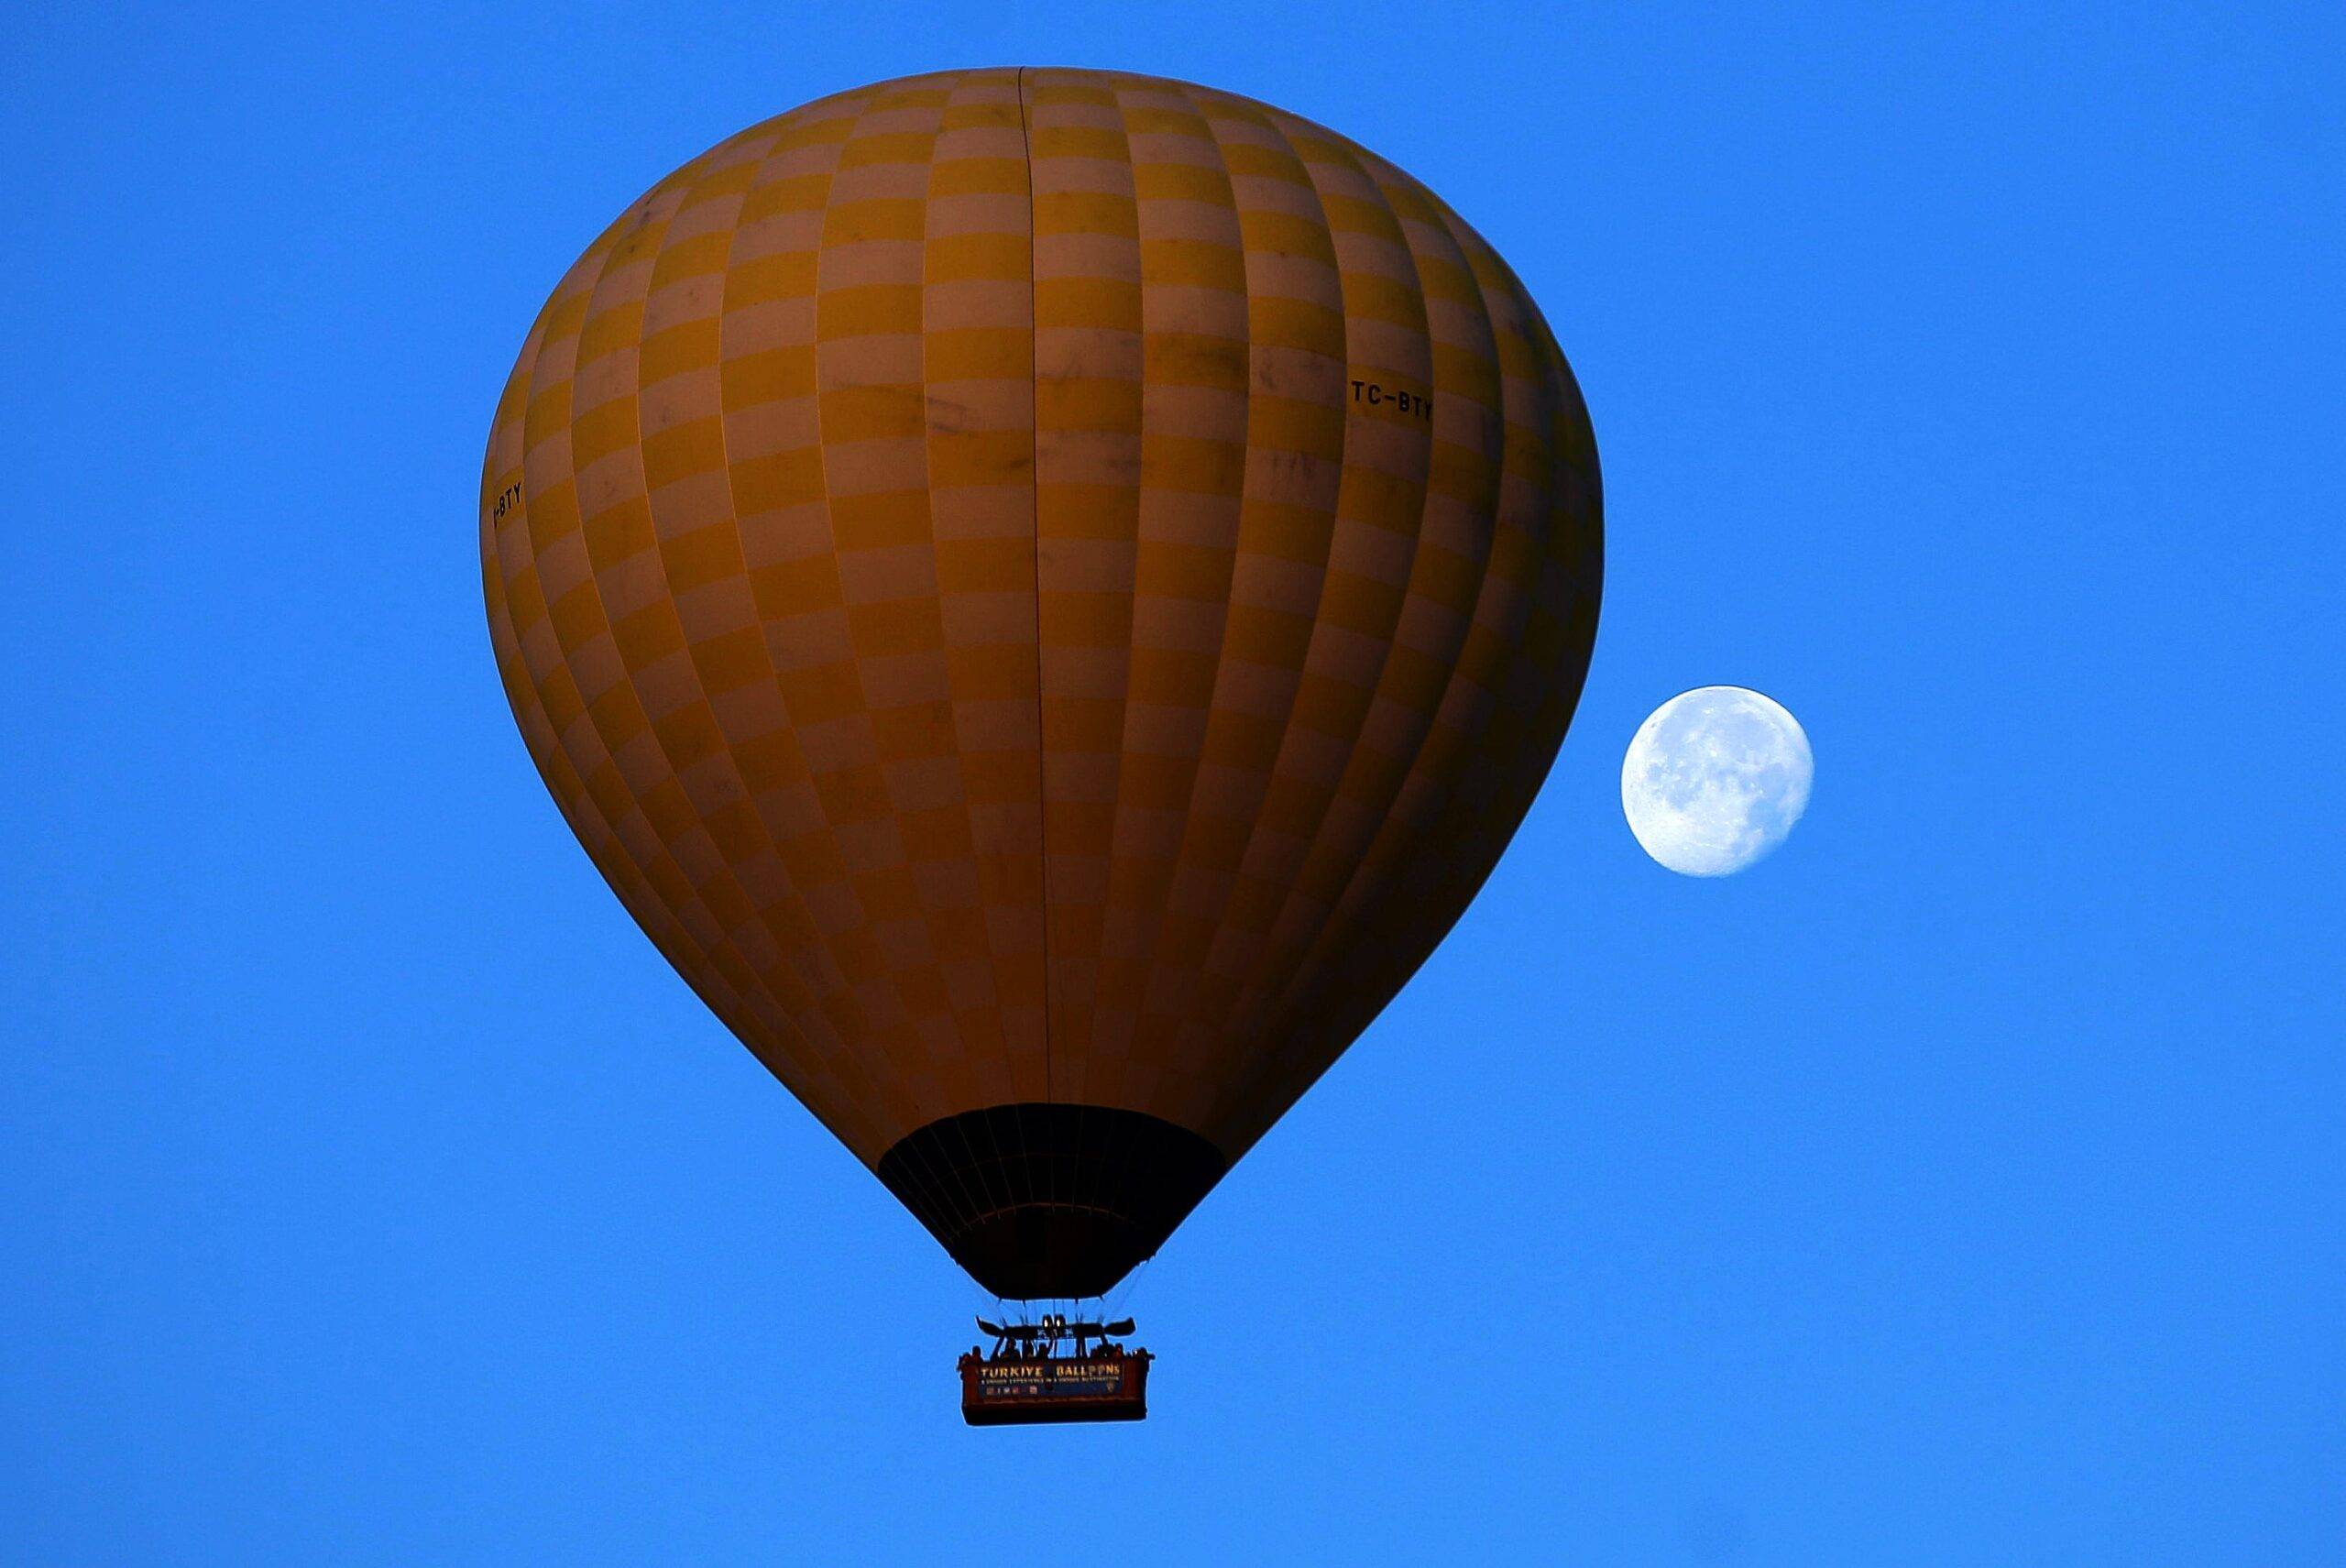 Tourists took flights through thermal balloons in the Cappadocia region in Turkey [Behçet Alkan/Anadolu Agency]